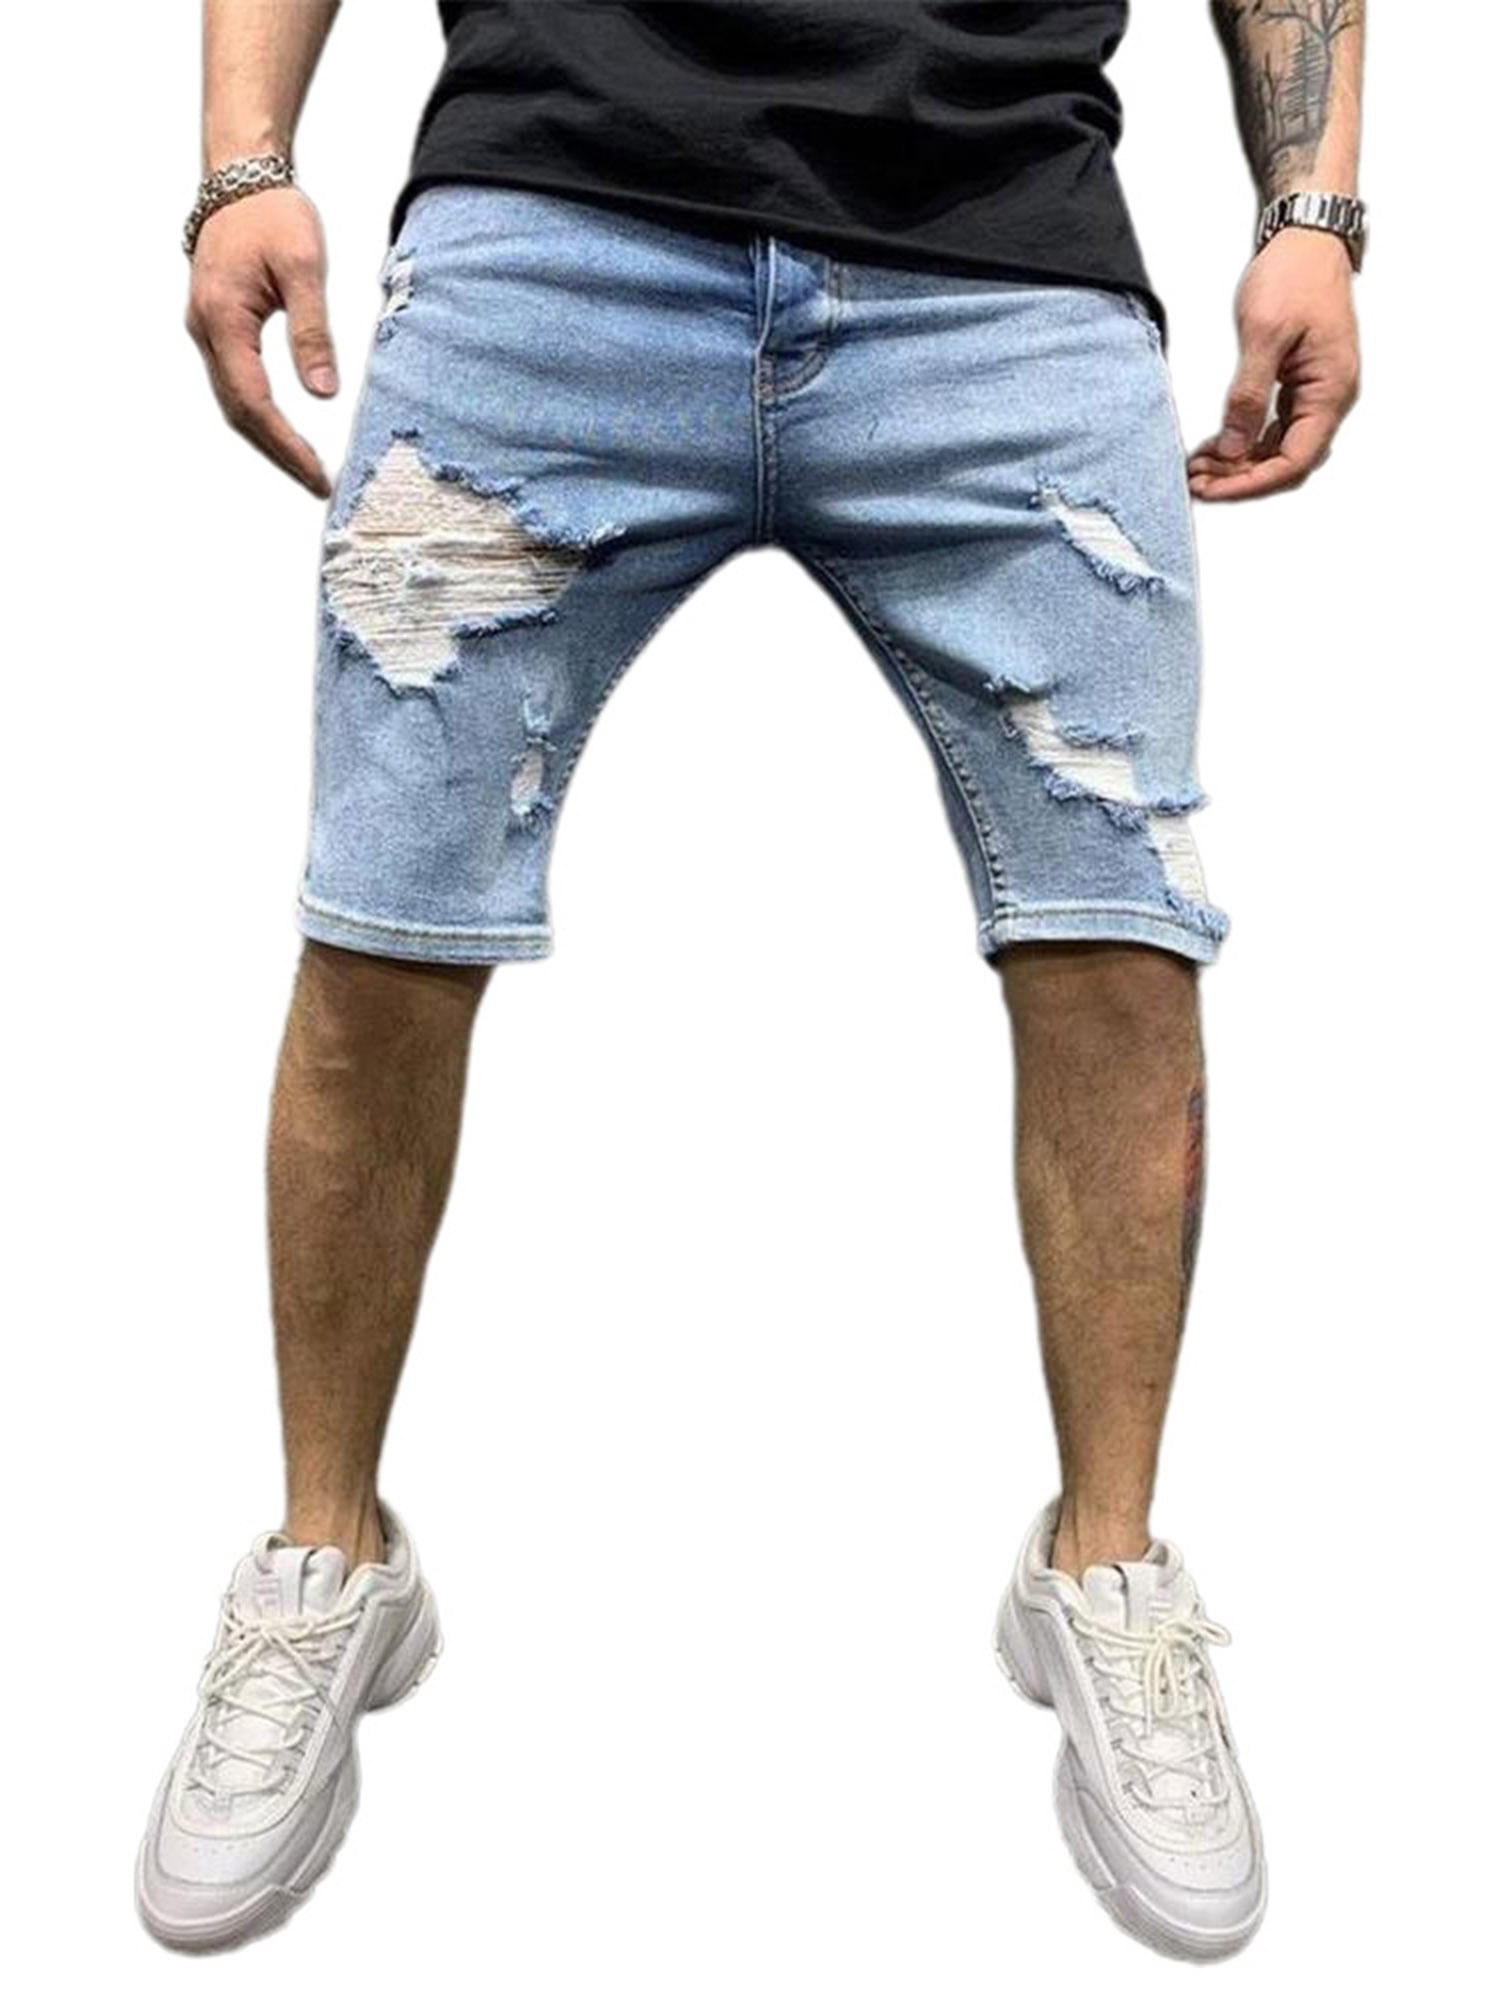 Mens Cargo Jeans Shorts Summer Pants Denim Pocket 3/4 Trousers Casual Biker Look